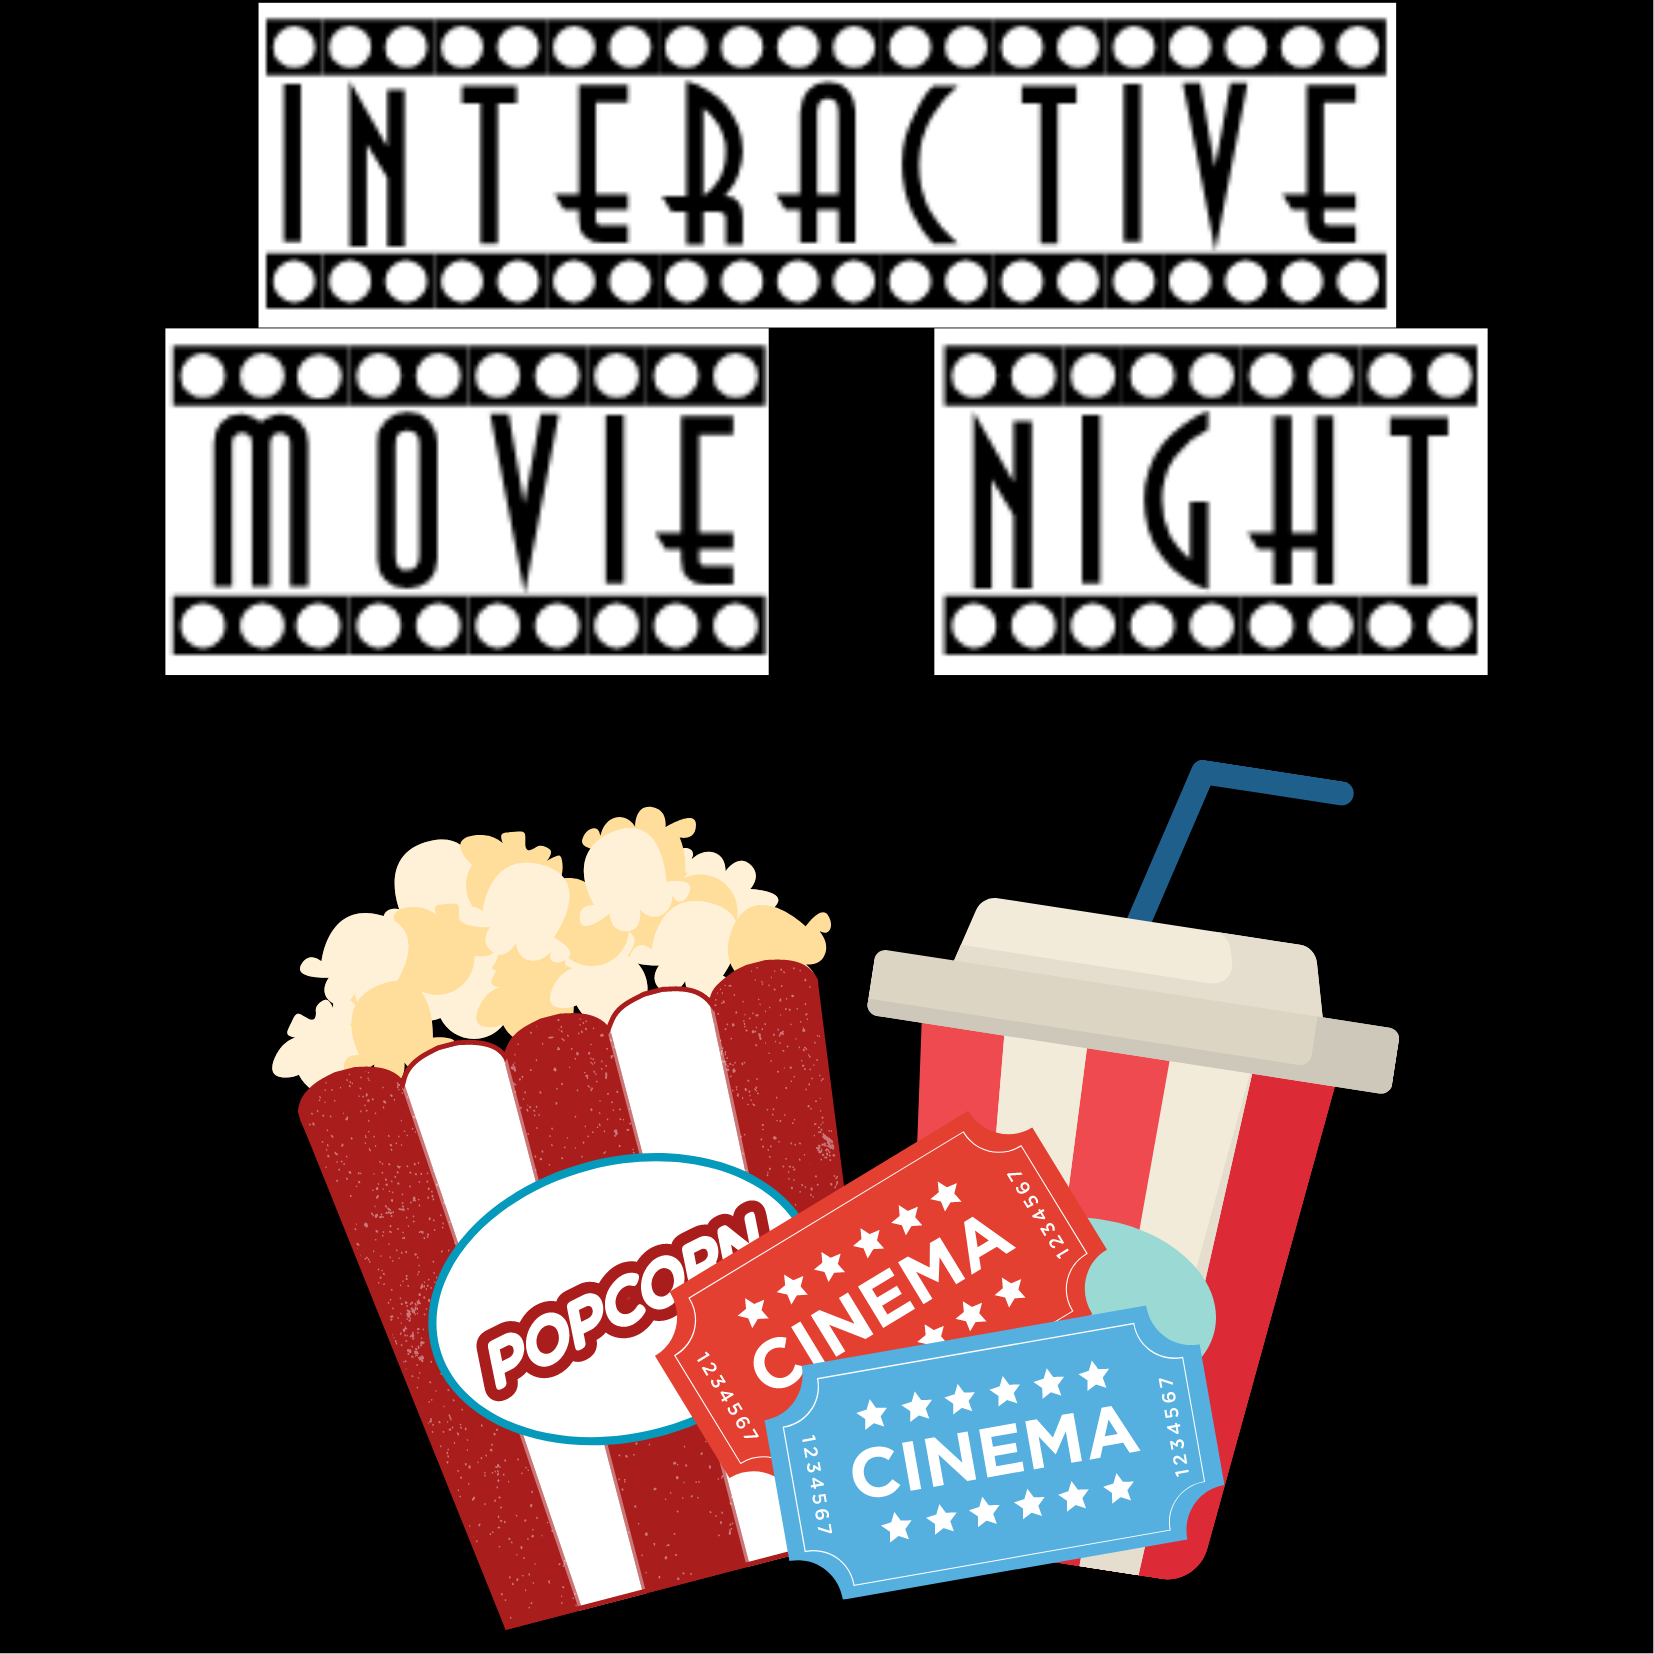 Interactive movie night popcorn tickets and soda